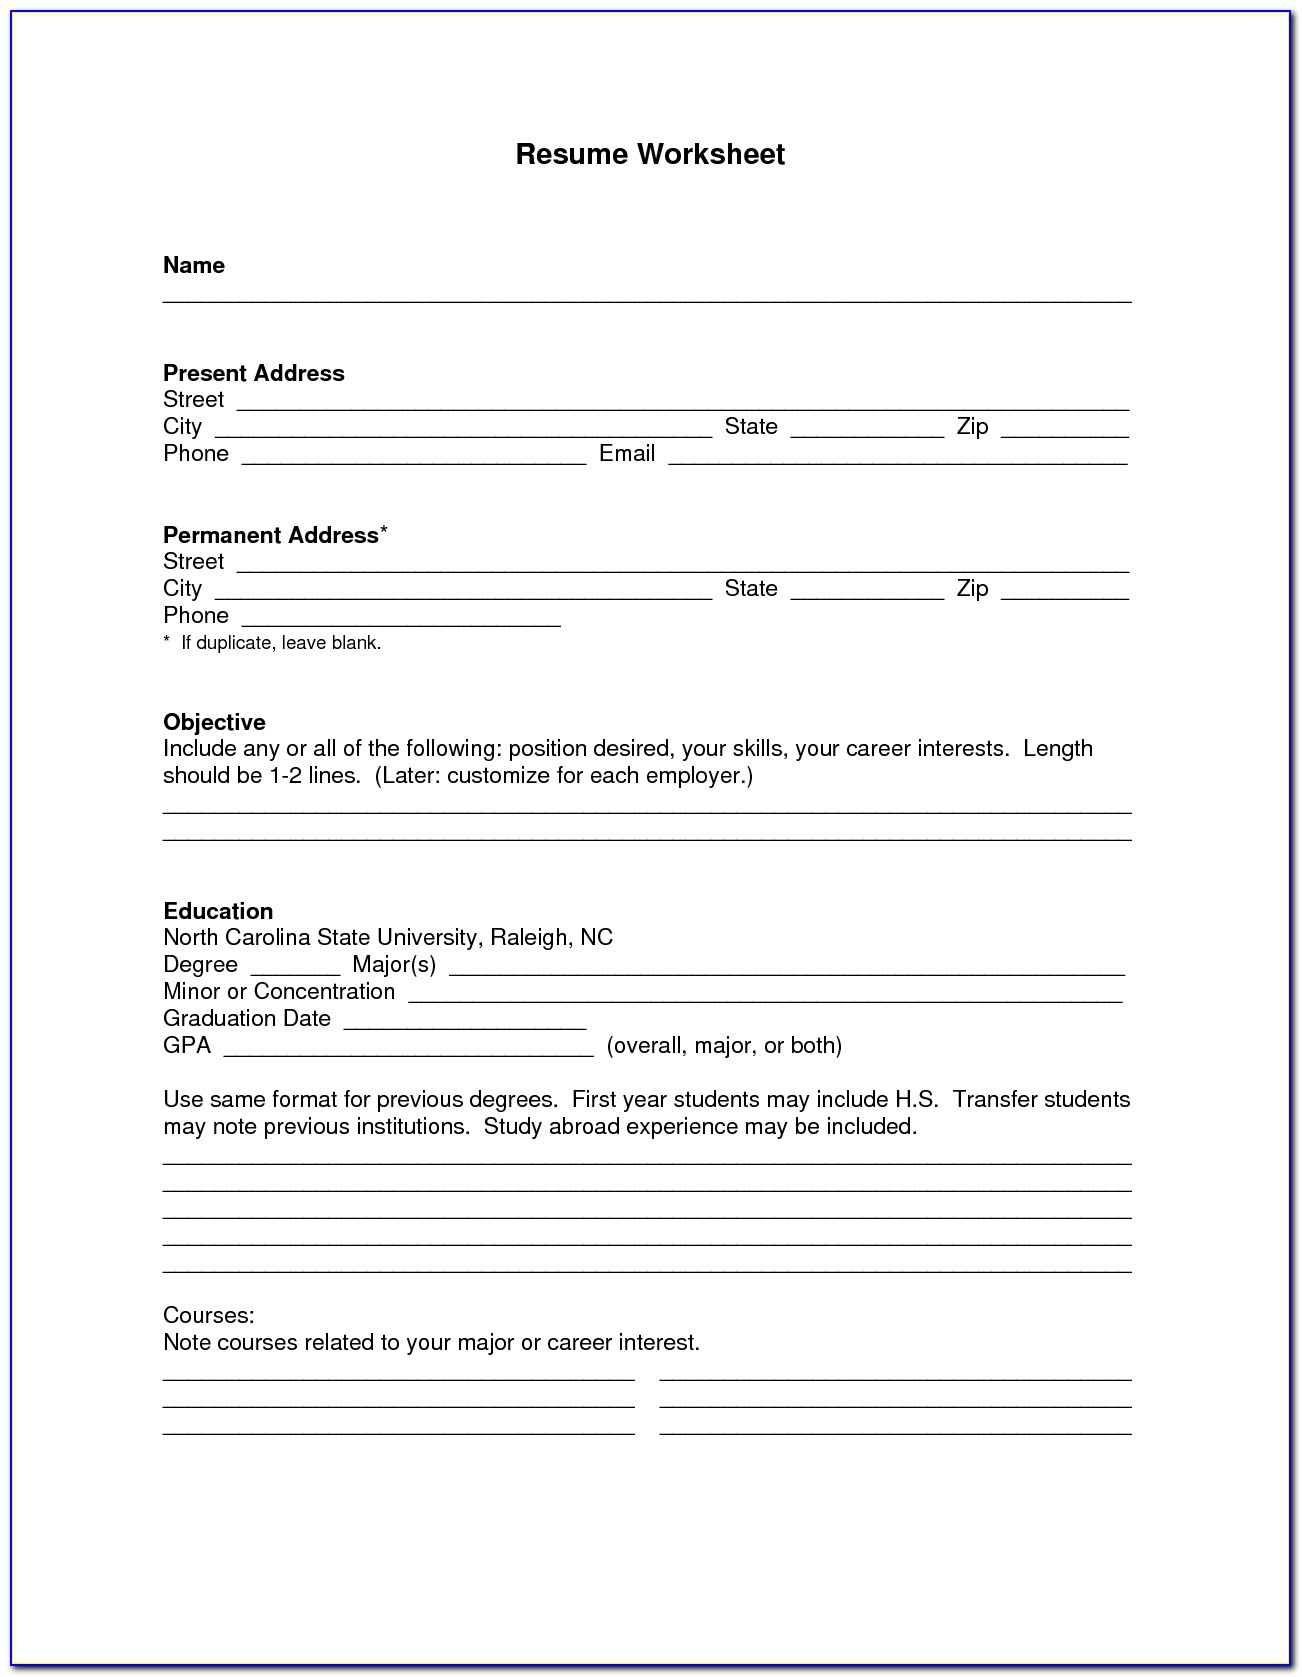 Blank Resume Form For Job Application Download